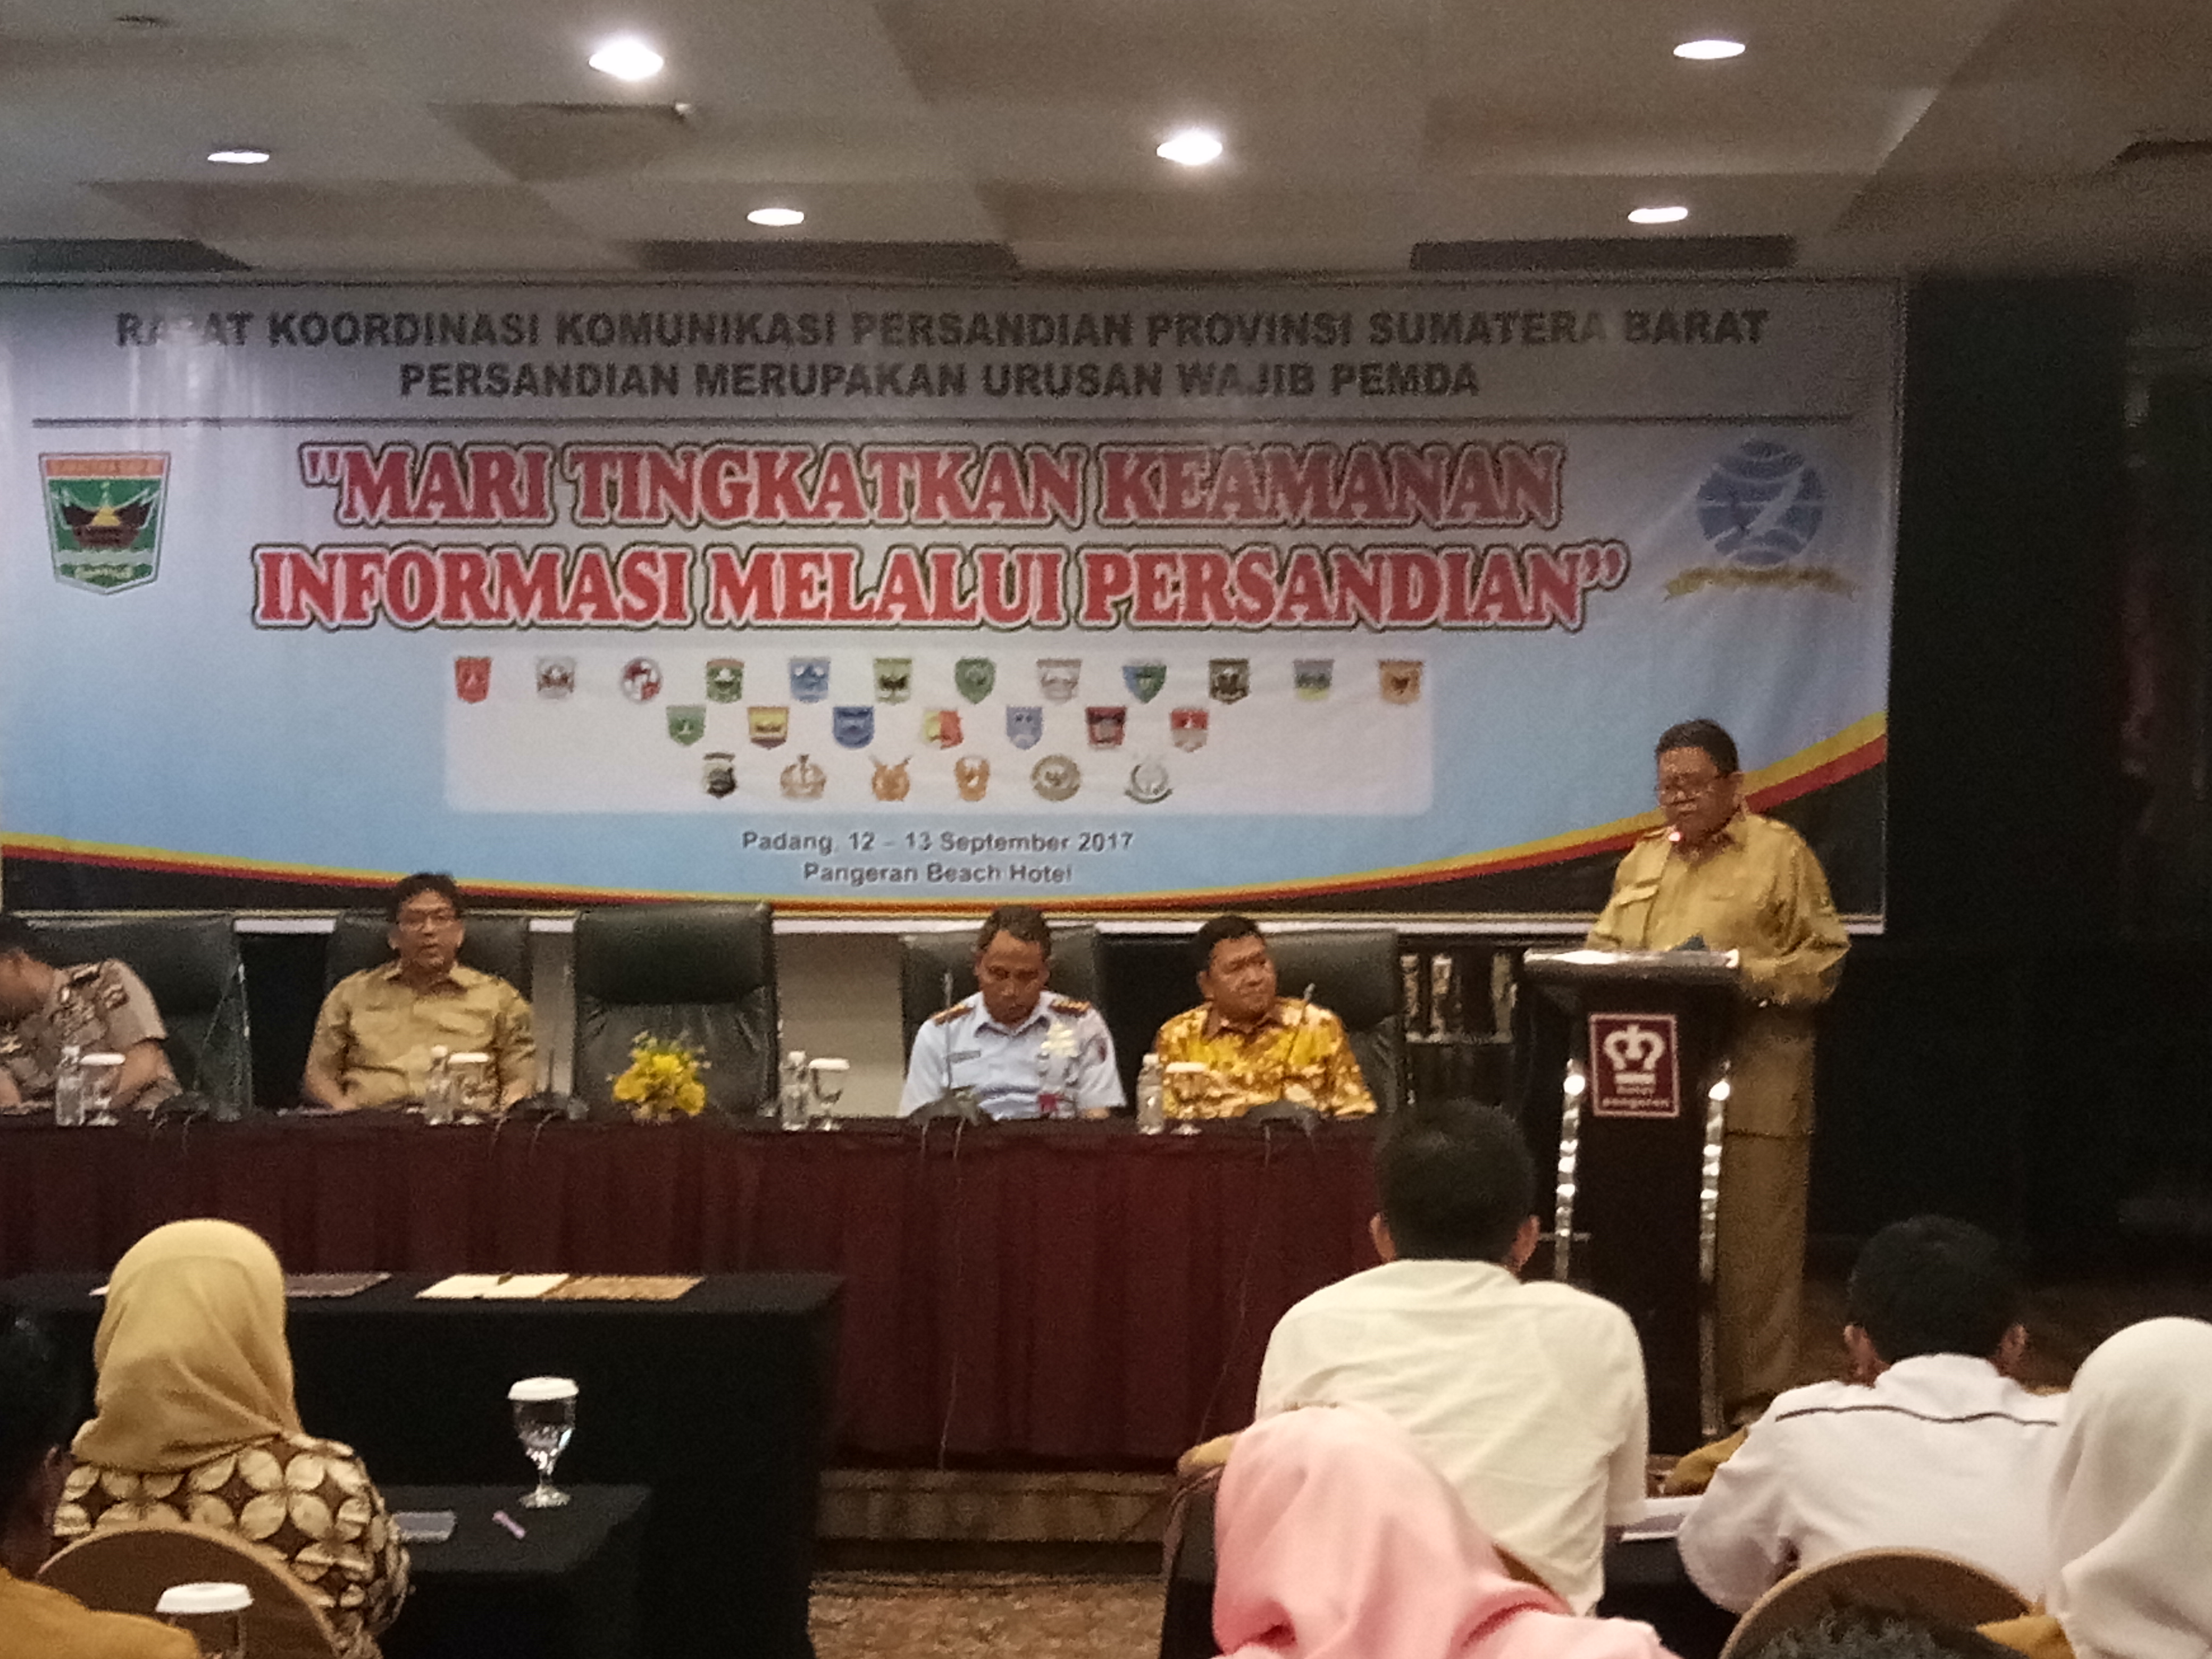 Rapat Koordinasi Komunikasi Persandian Provinsi Sumatera Barat Tahun 2017 